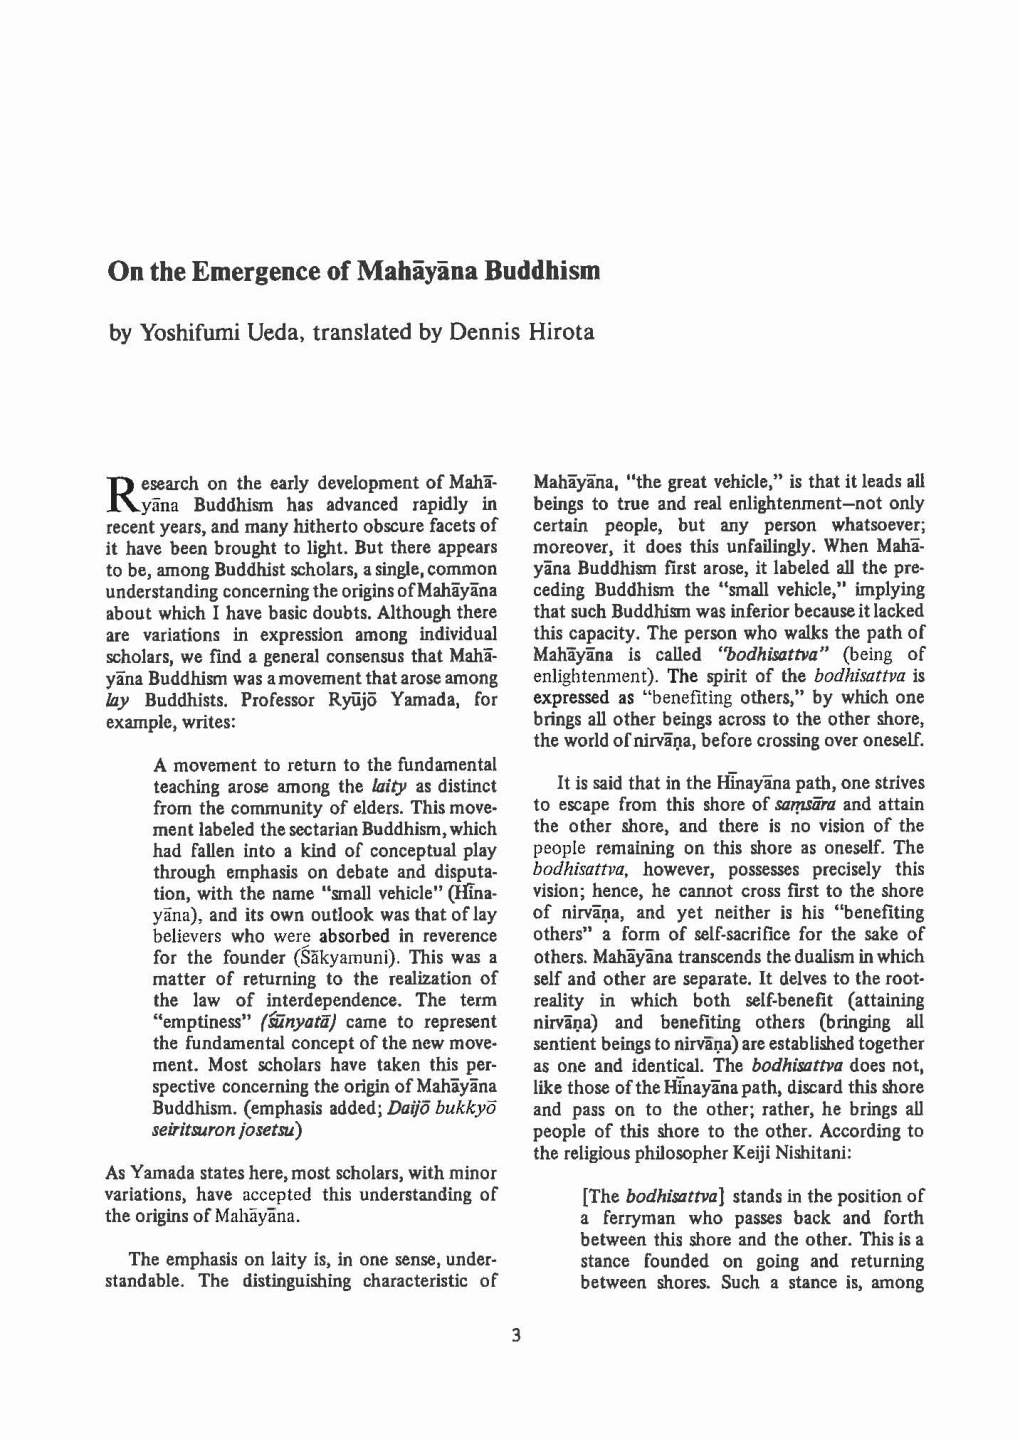 On the Emergence of Mahayana Buddhism by Yoshifumi Veda, Translated by Dennis Hirota